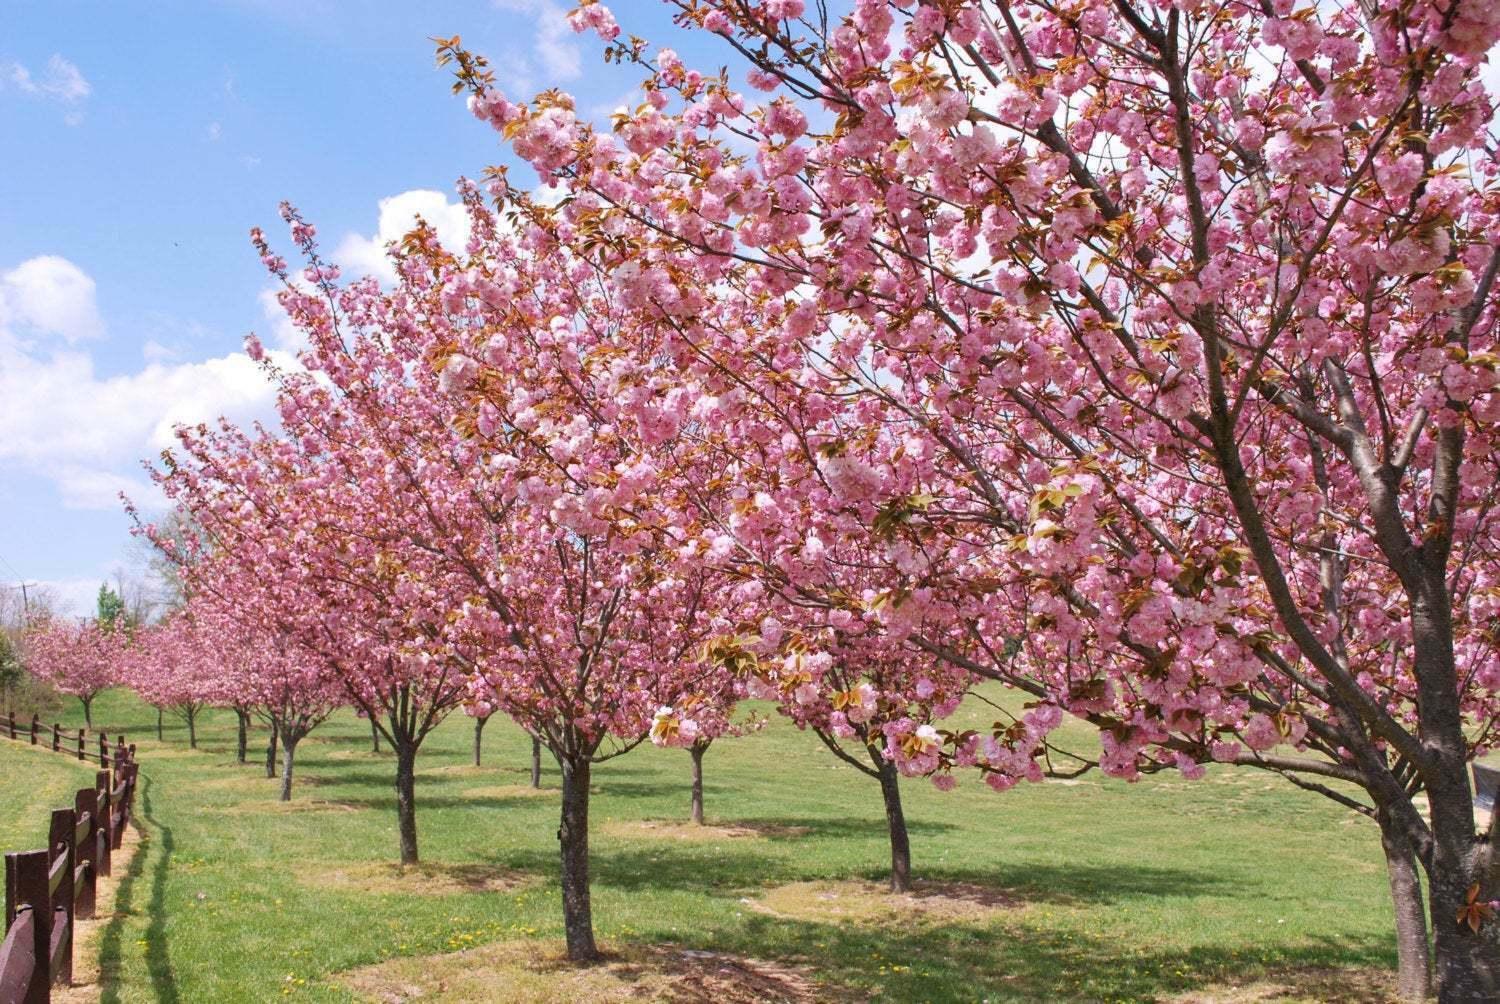 2 Okame Flowering Cherry Trees - Live Plants - 6-12" Tall Seedlings - 3" Pots - The Nursery Center